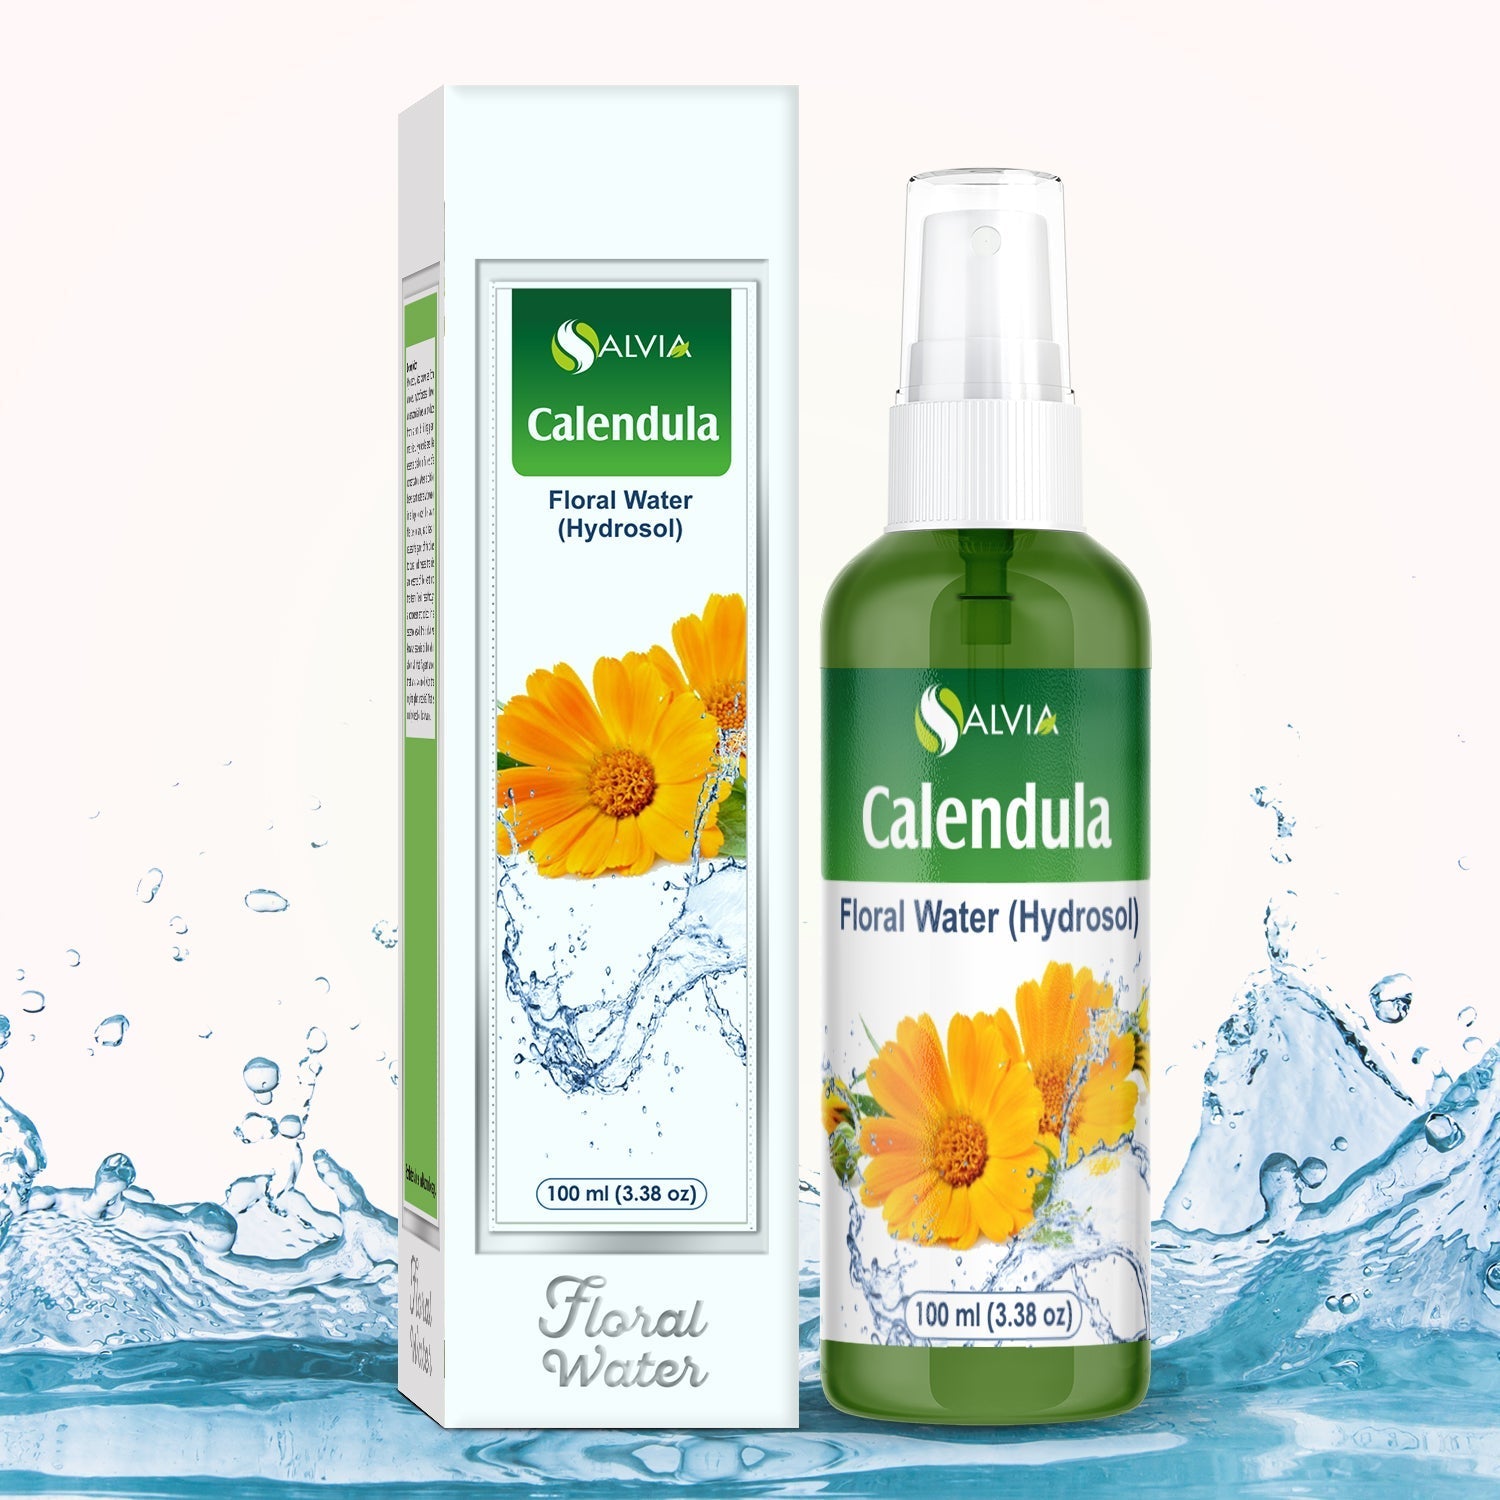 Salvia Floral Water 100 ml Calendula (Calendula officinalis) Floral Water Hydrosol 100% Pure And Natural